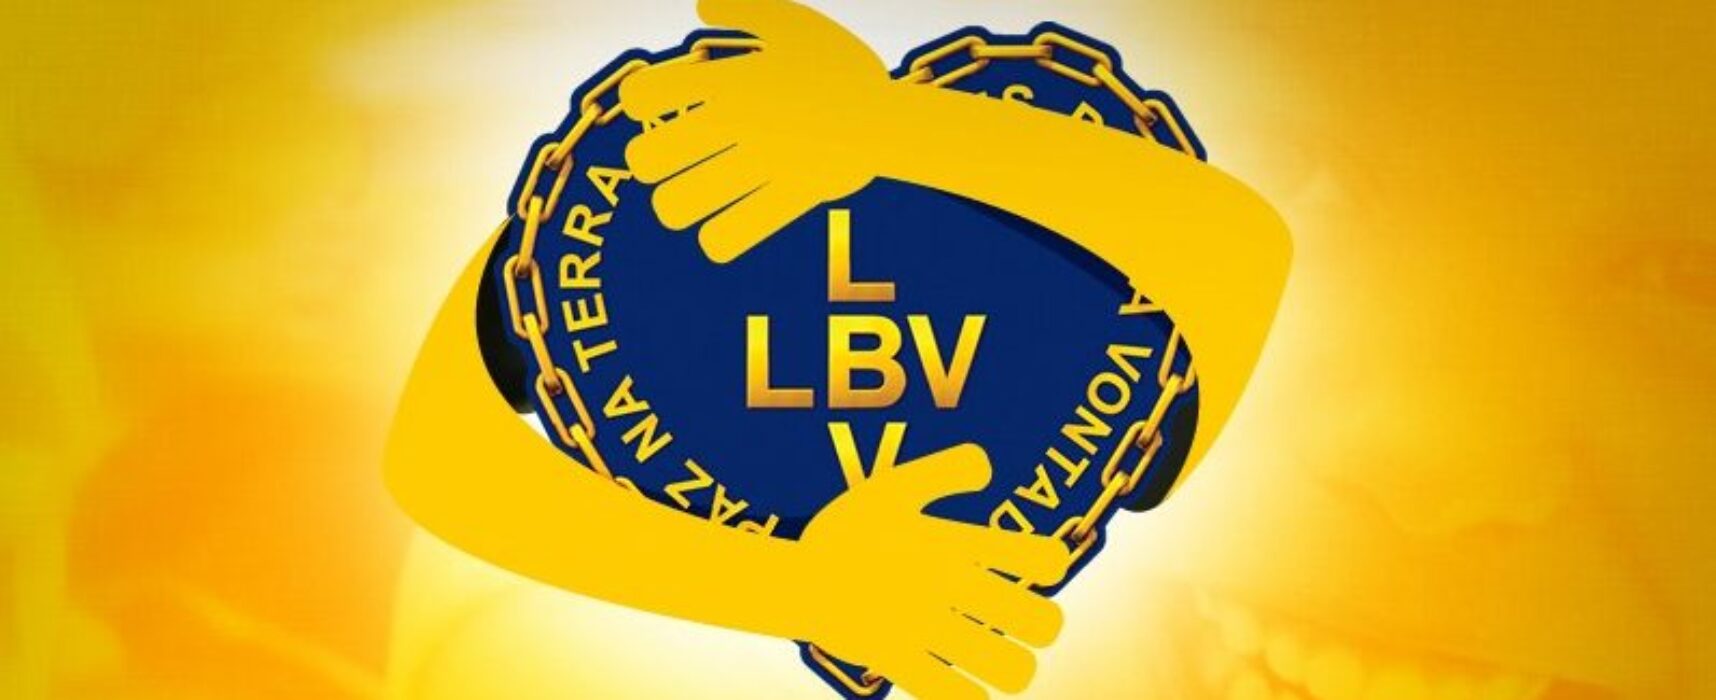 LBV completa 70 anos de trabalho promovendo a Caridade Completa: a do corpo e da Alma